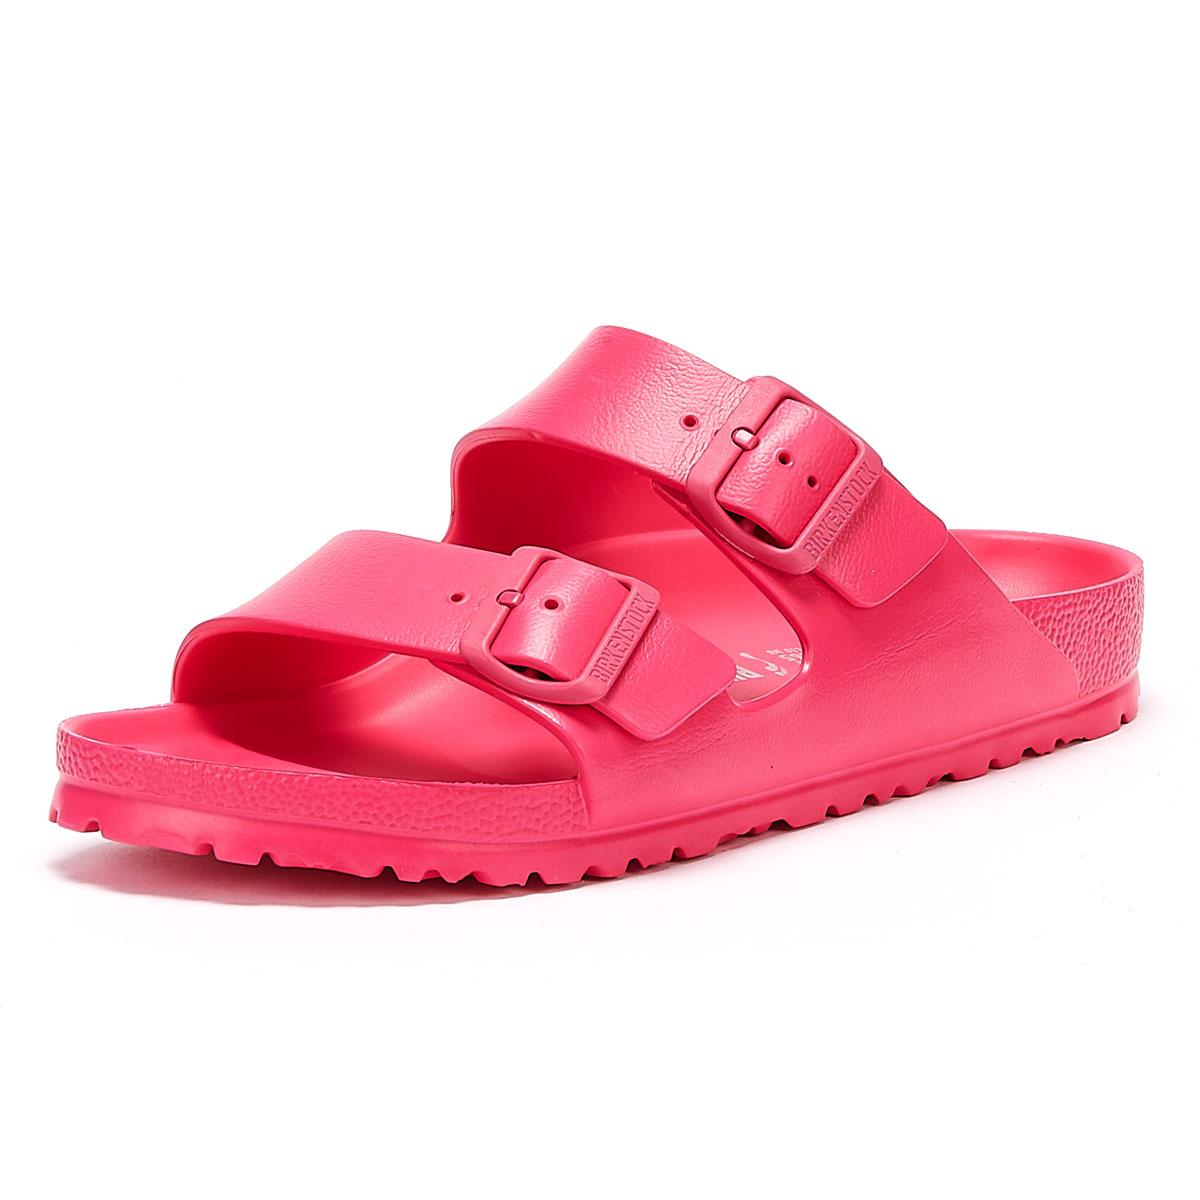 Birkenstock Arizona Eva Womens Pink Sandals - Lyst